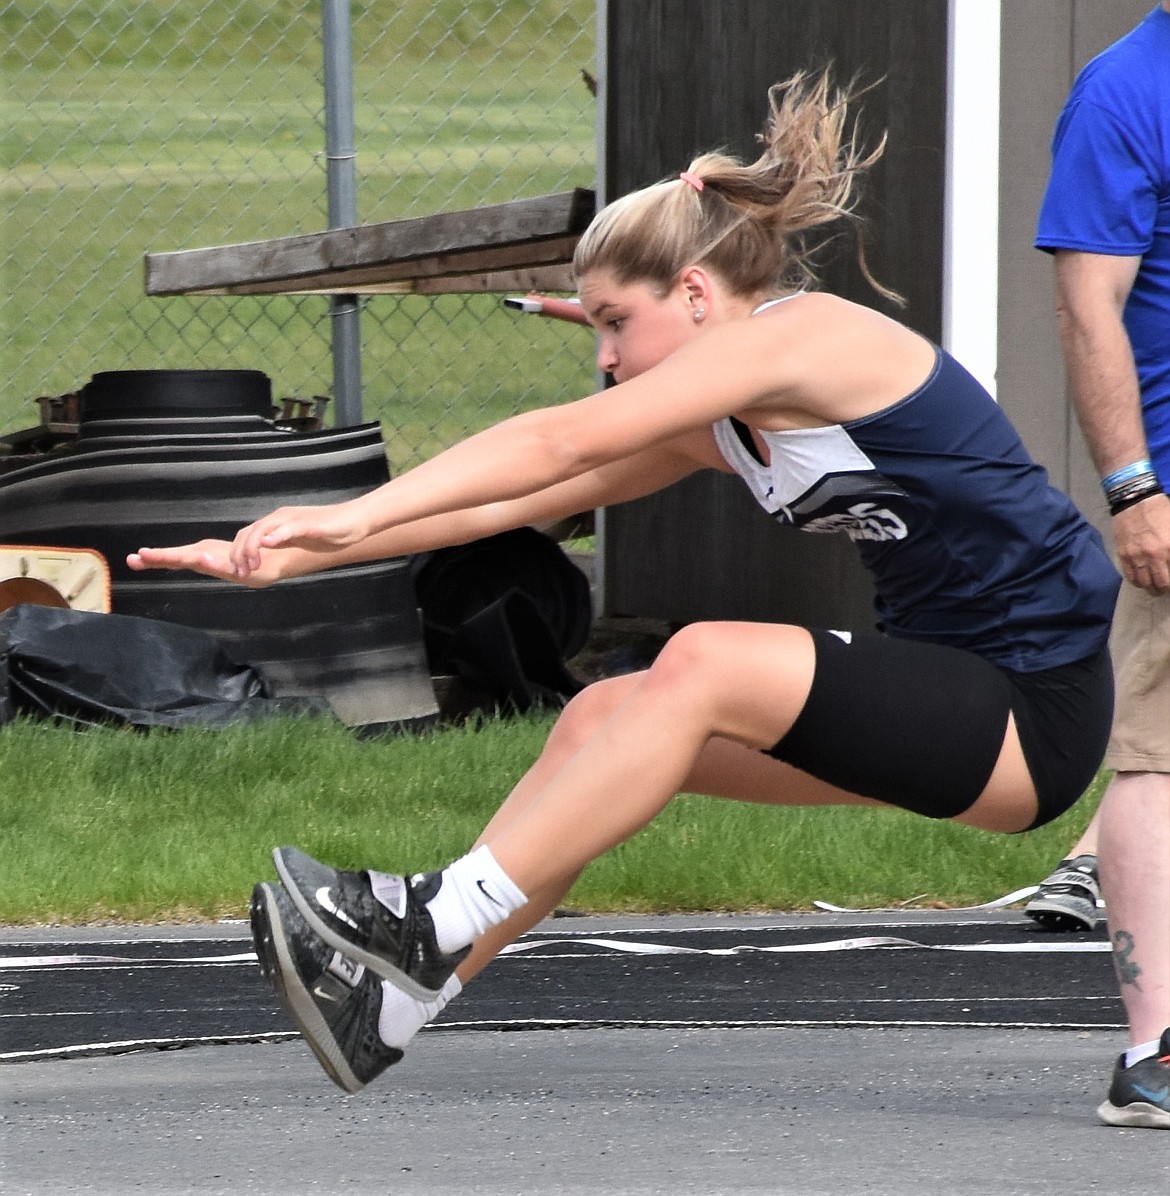 (Photo courtesy of Maureen Blackmore)
Holly Ansley winning the Long jump